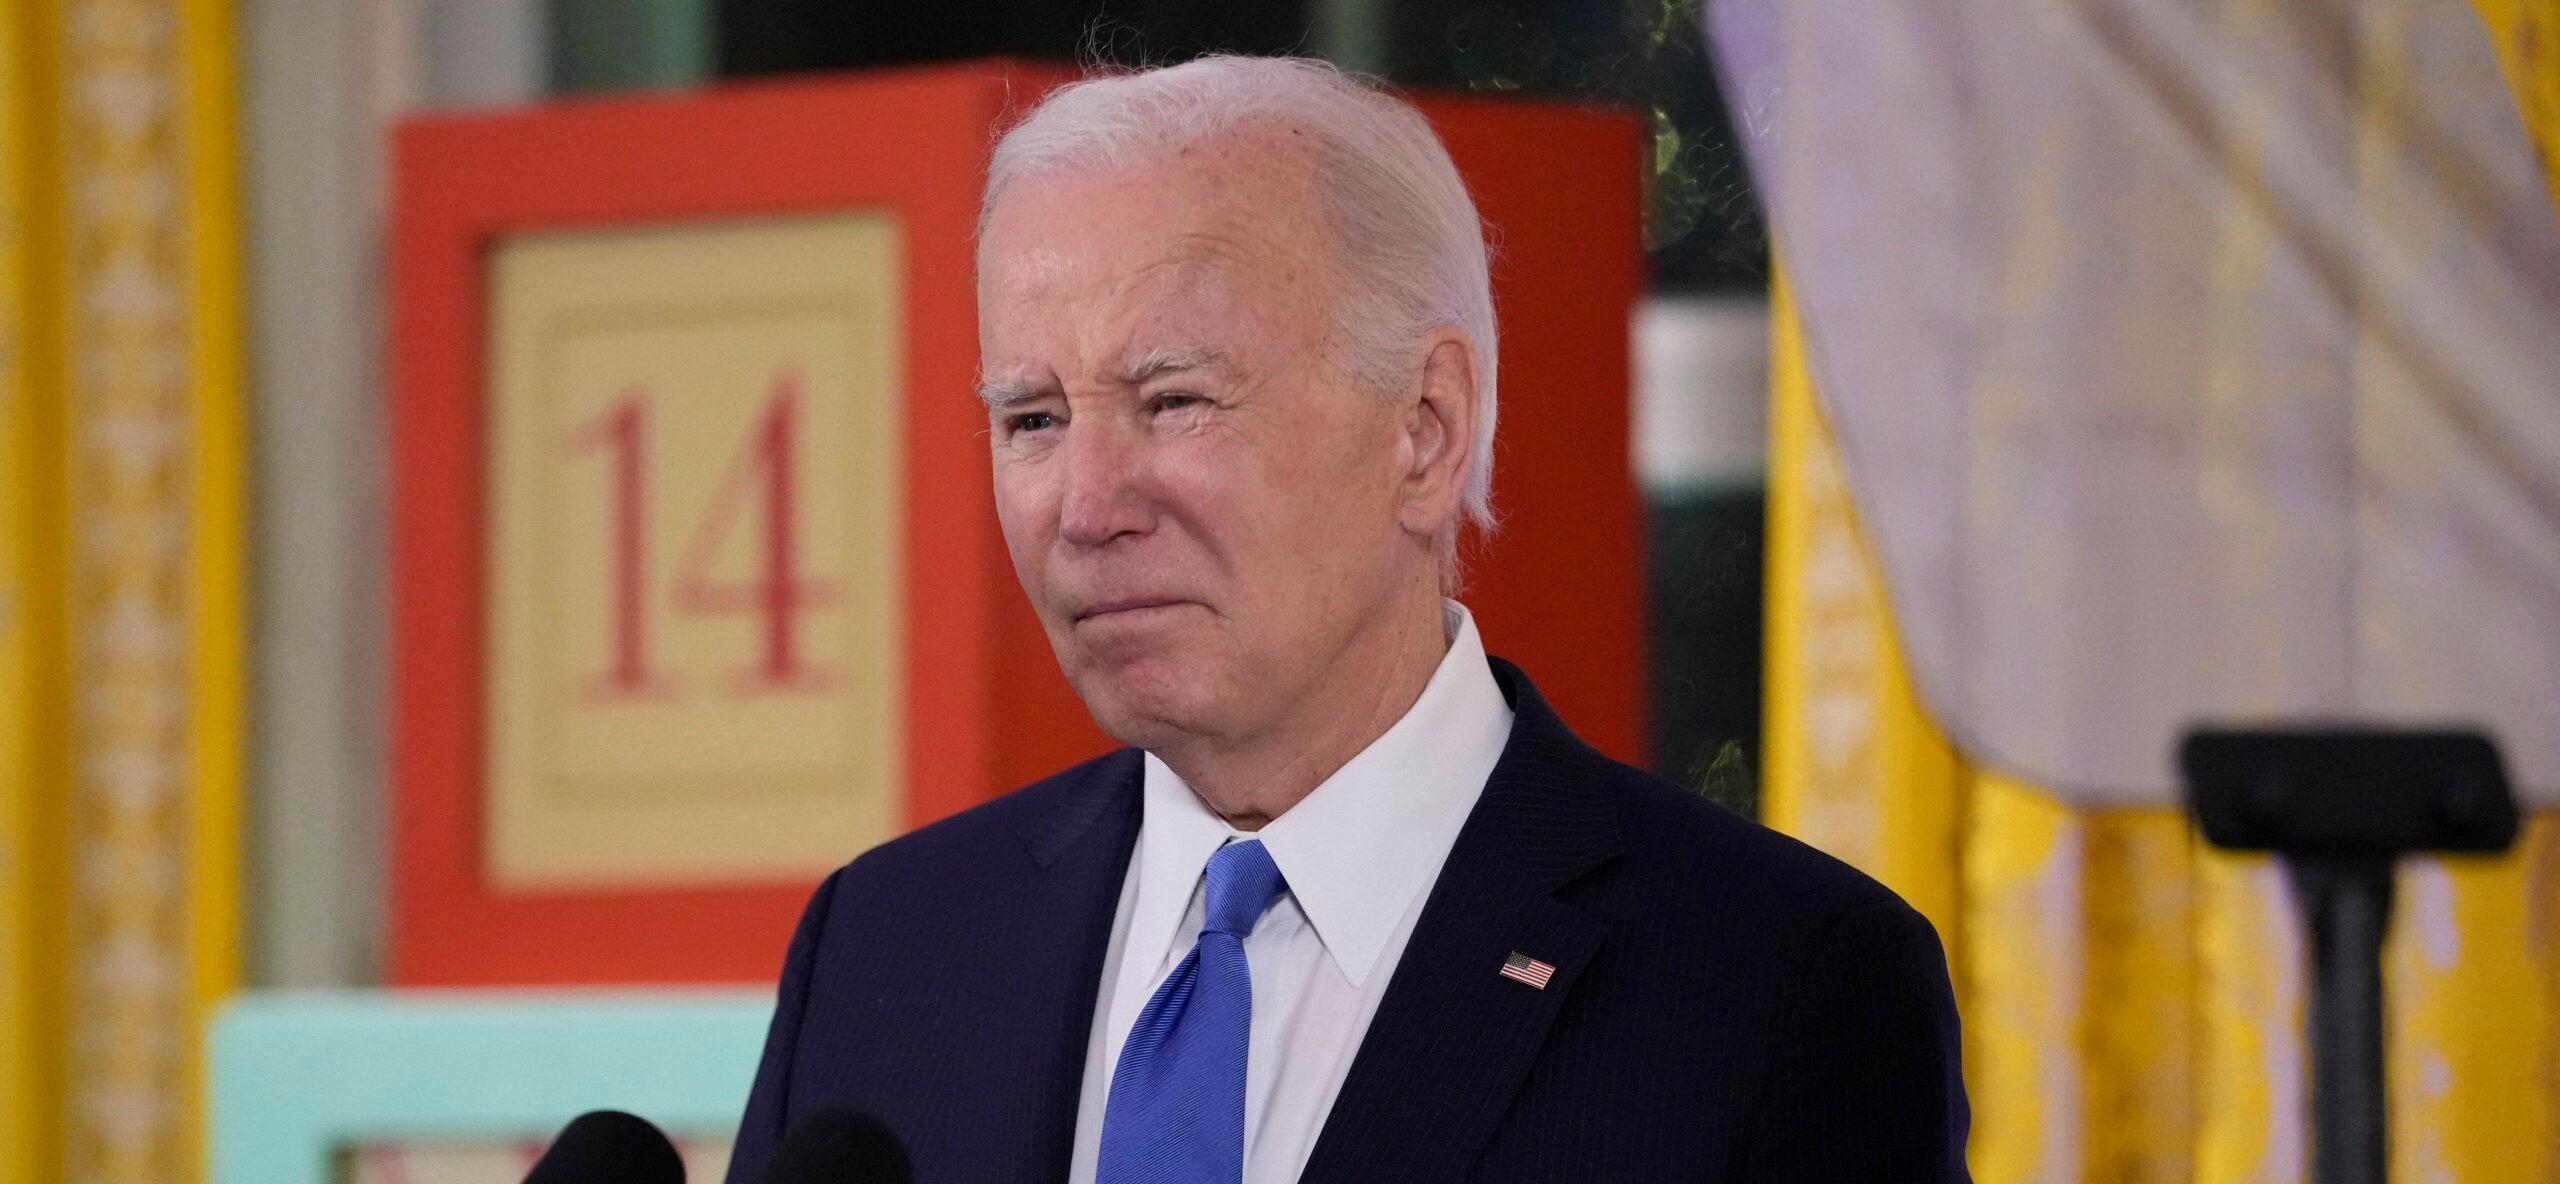 Secret Service Acts On Potential Threat To Joe Biden Following Car Crash